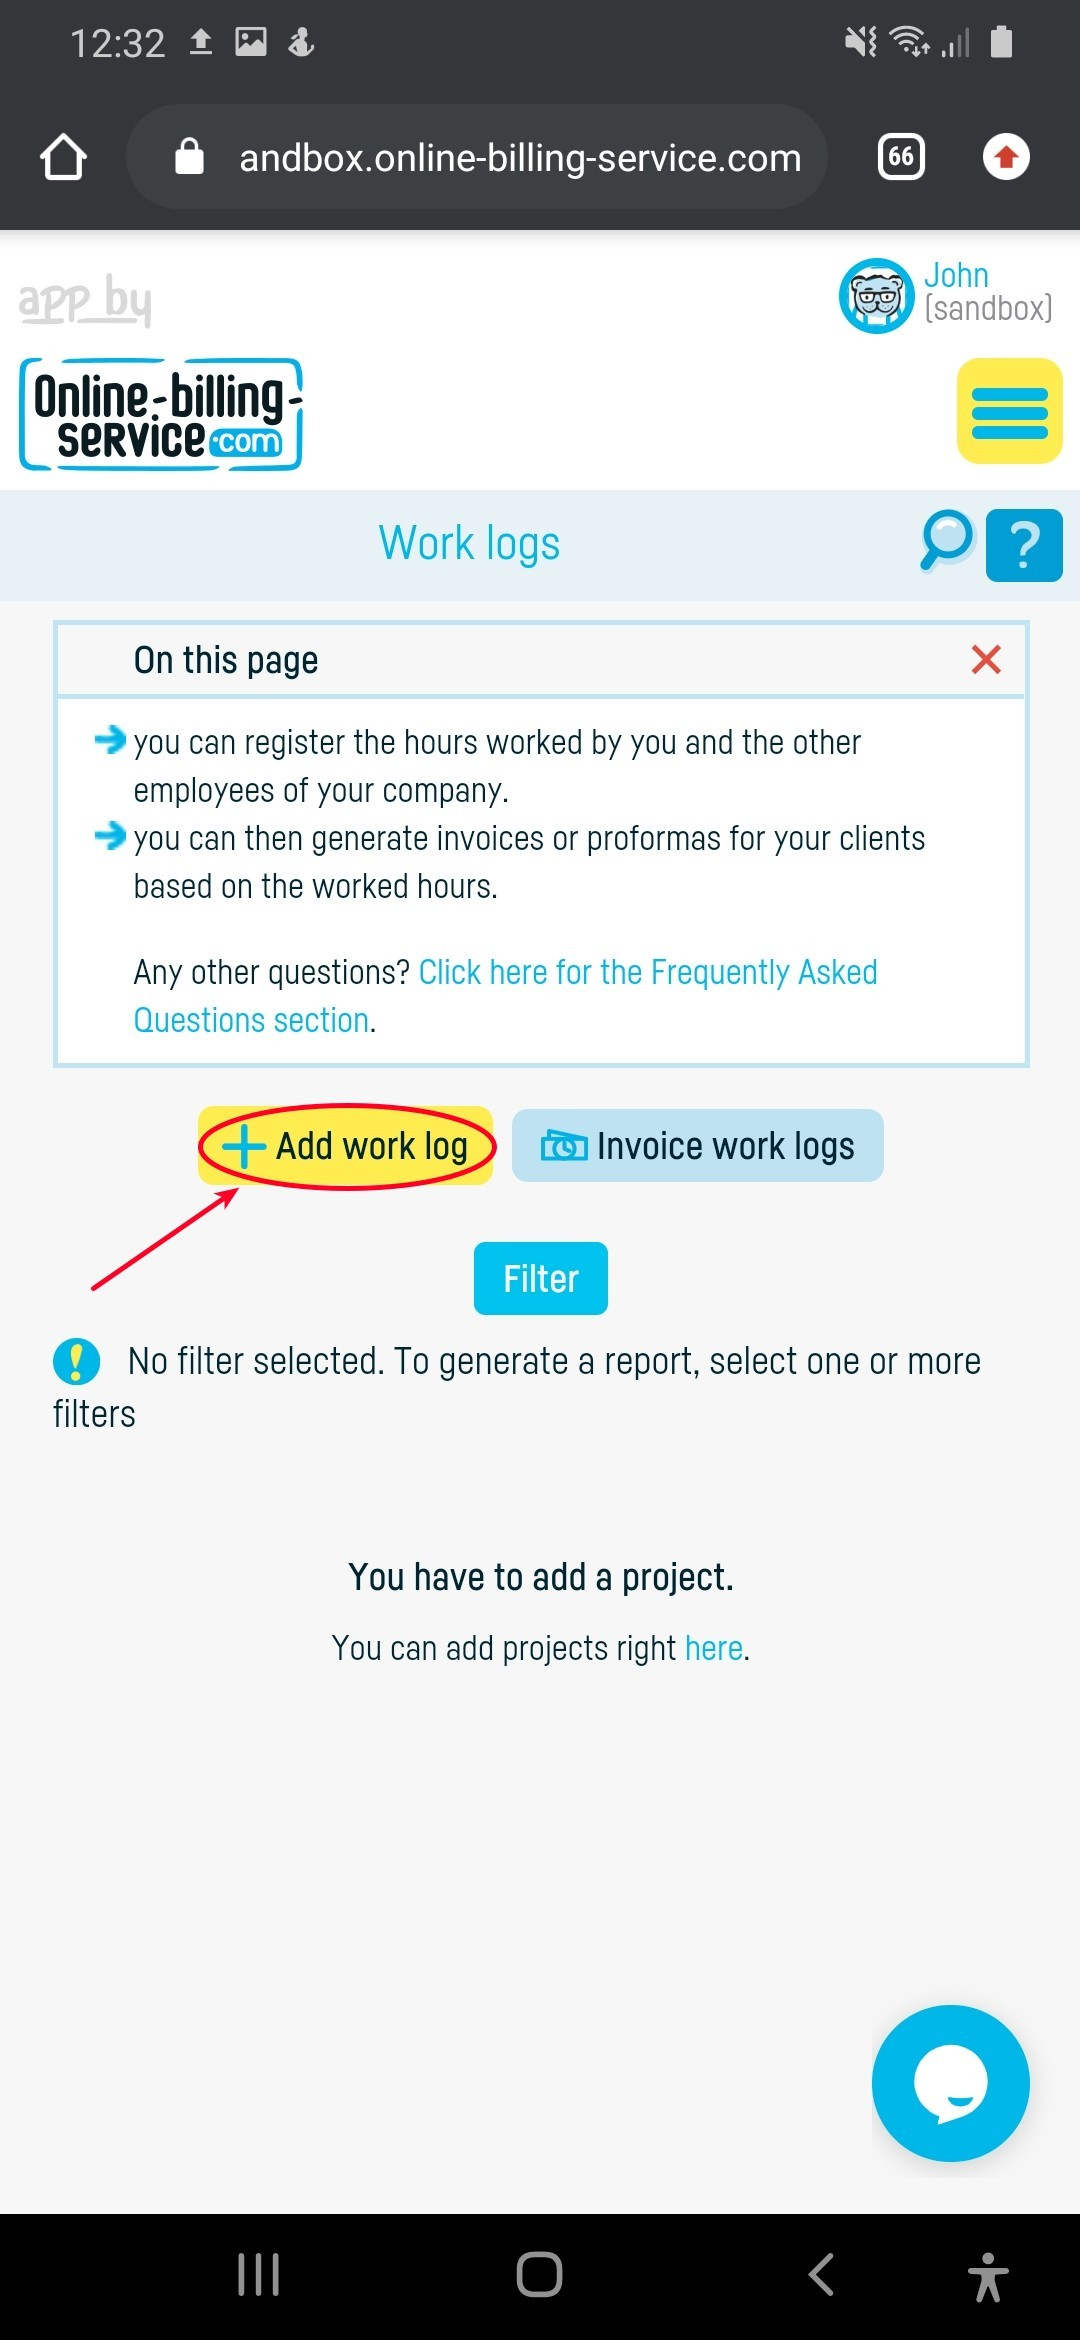 Work log adding instructions - step 3